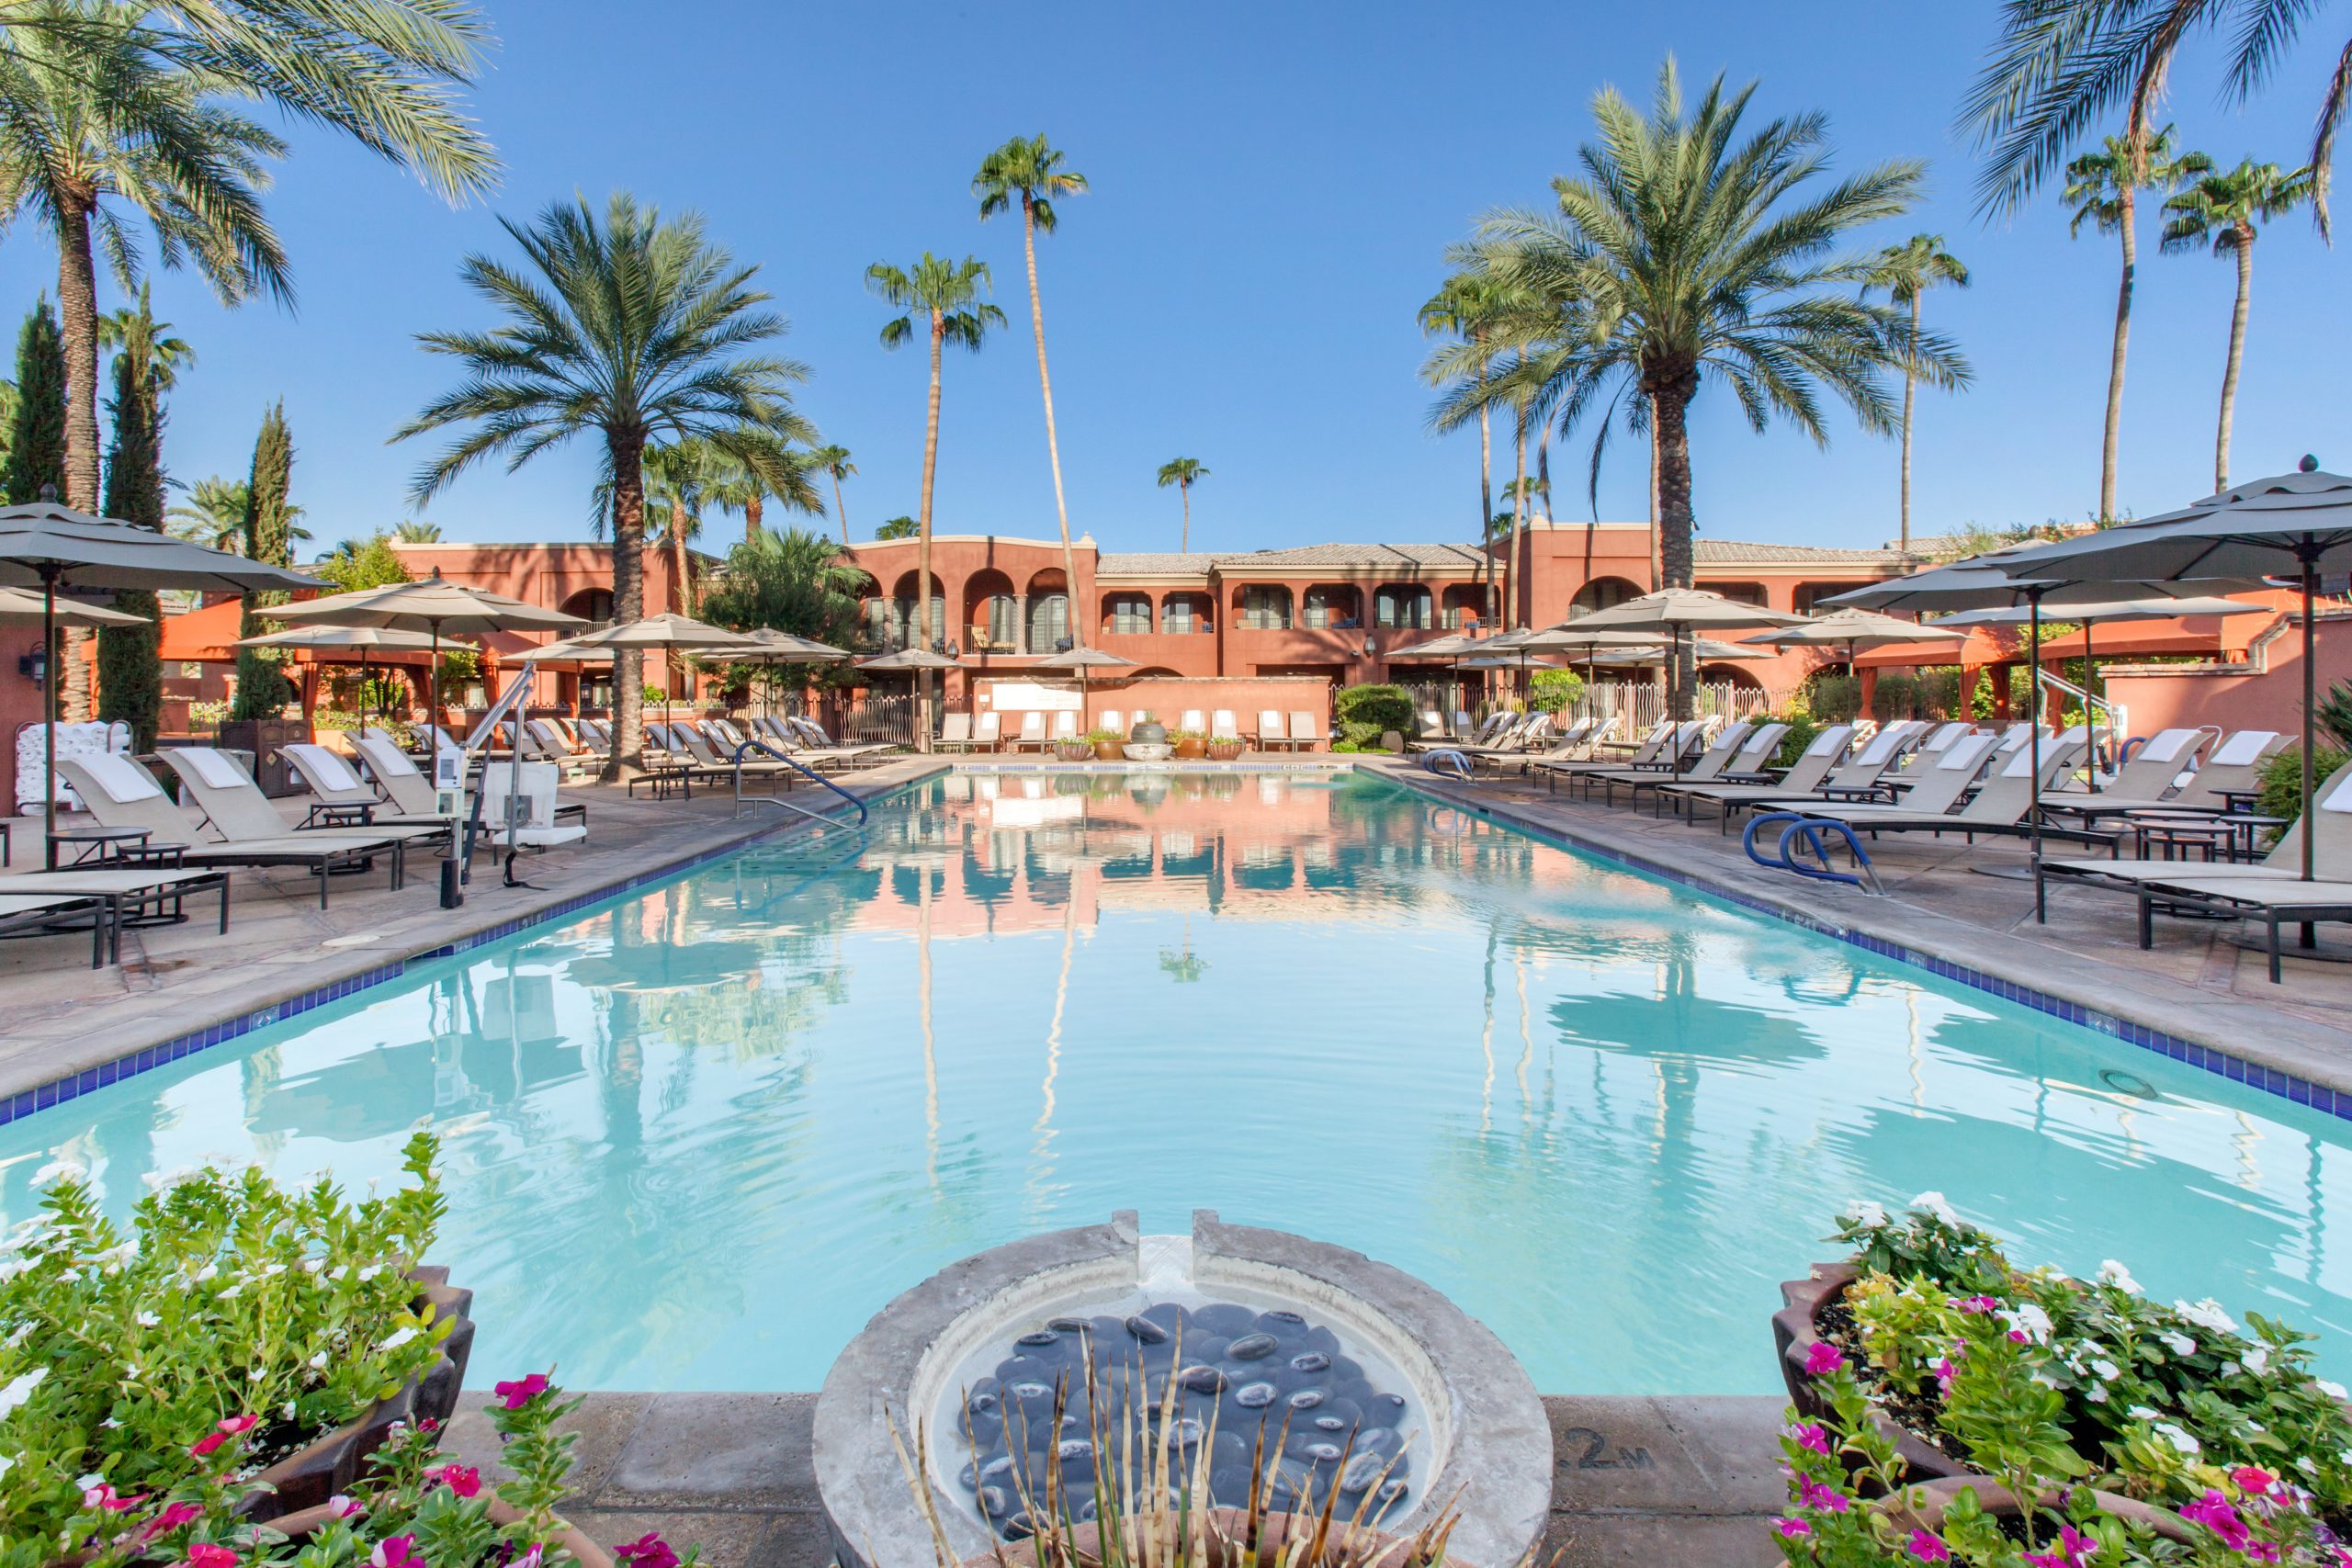 Omni Scottsdale Resort Pool